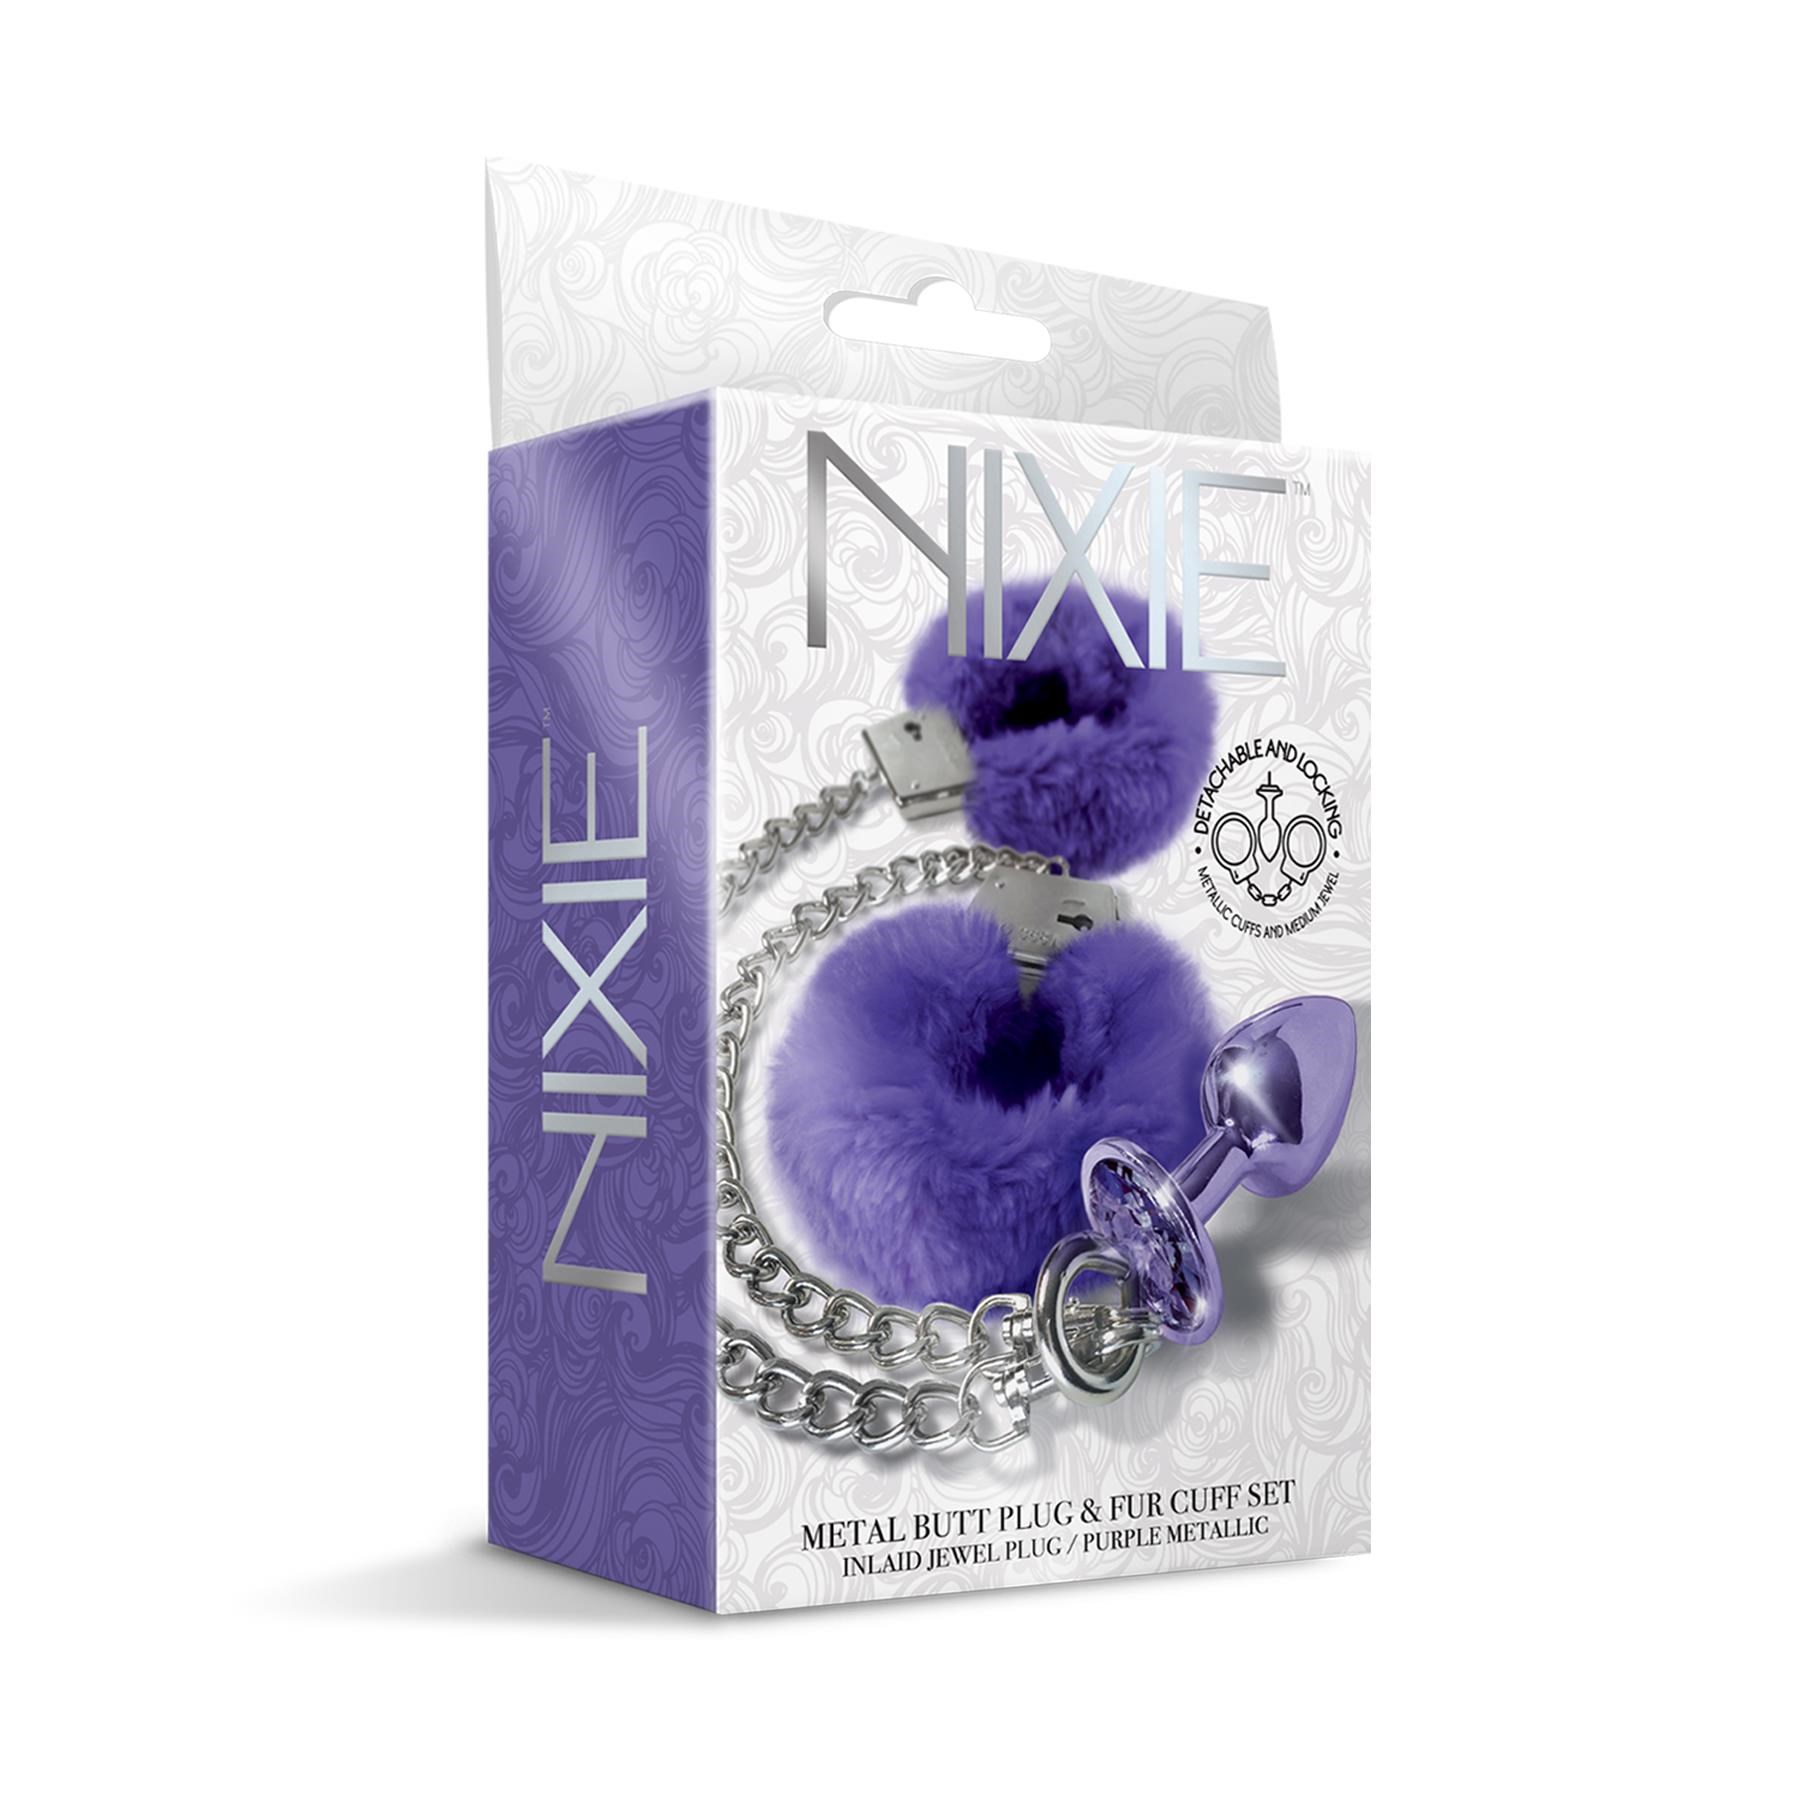 Nixie Metal Butt Plug and Fur Cuff Set - Packaging Shot - Purple